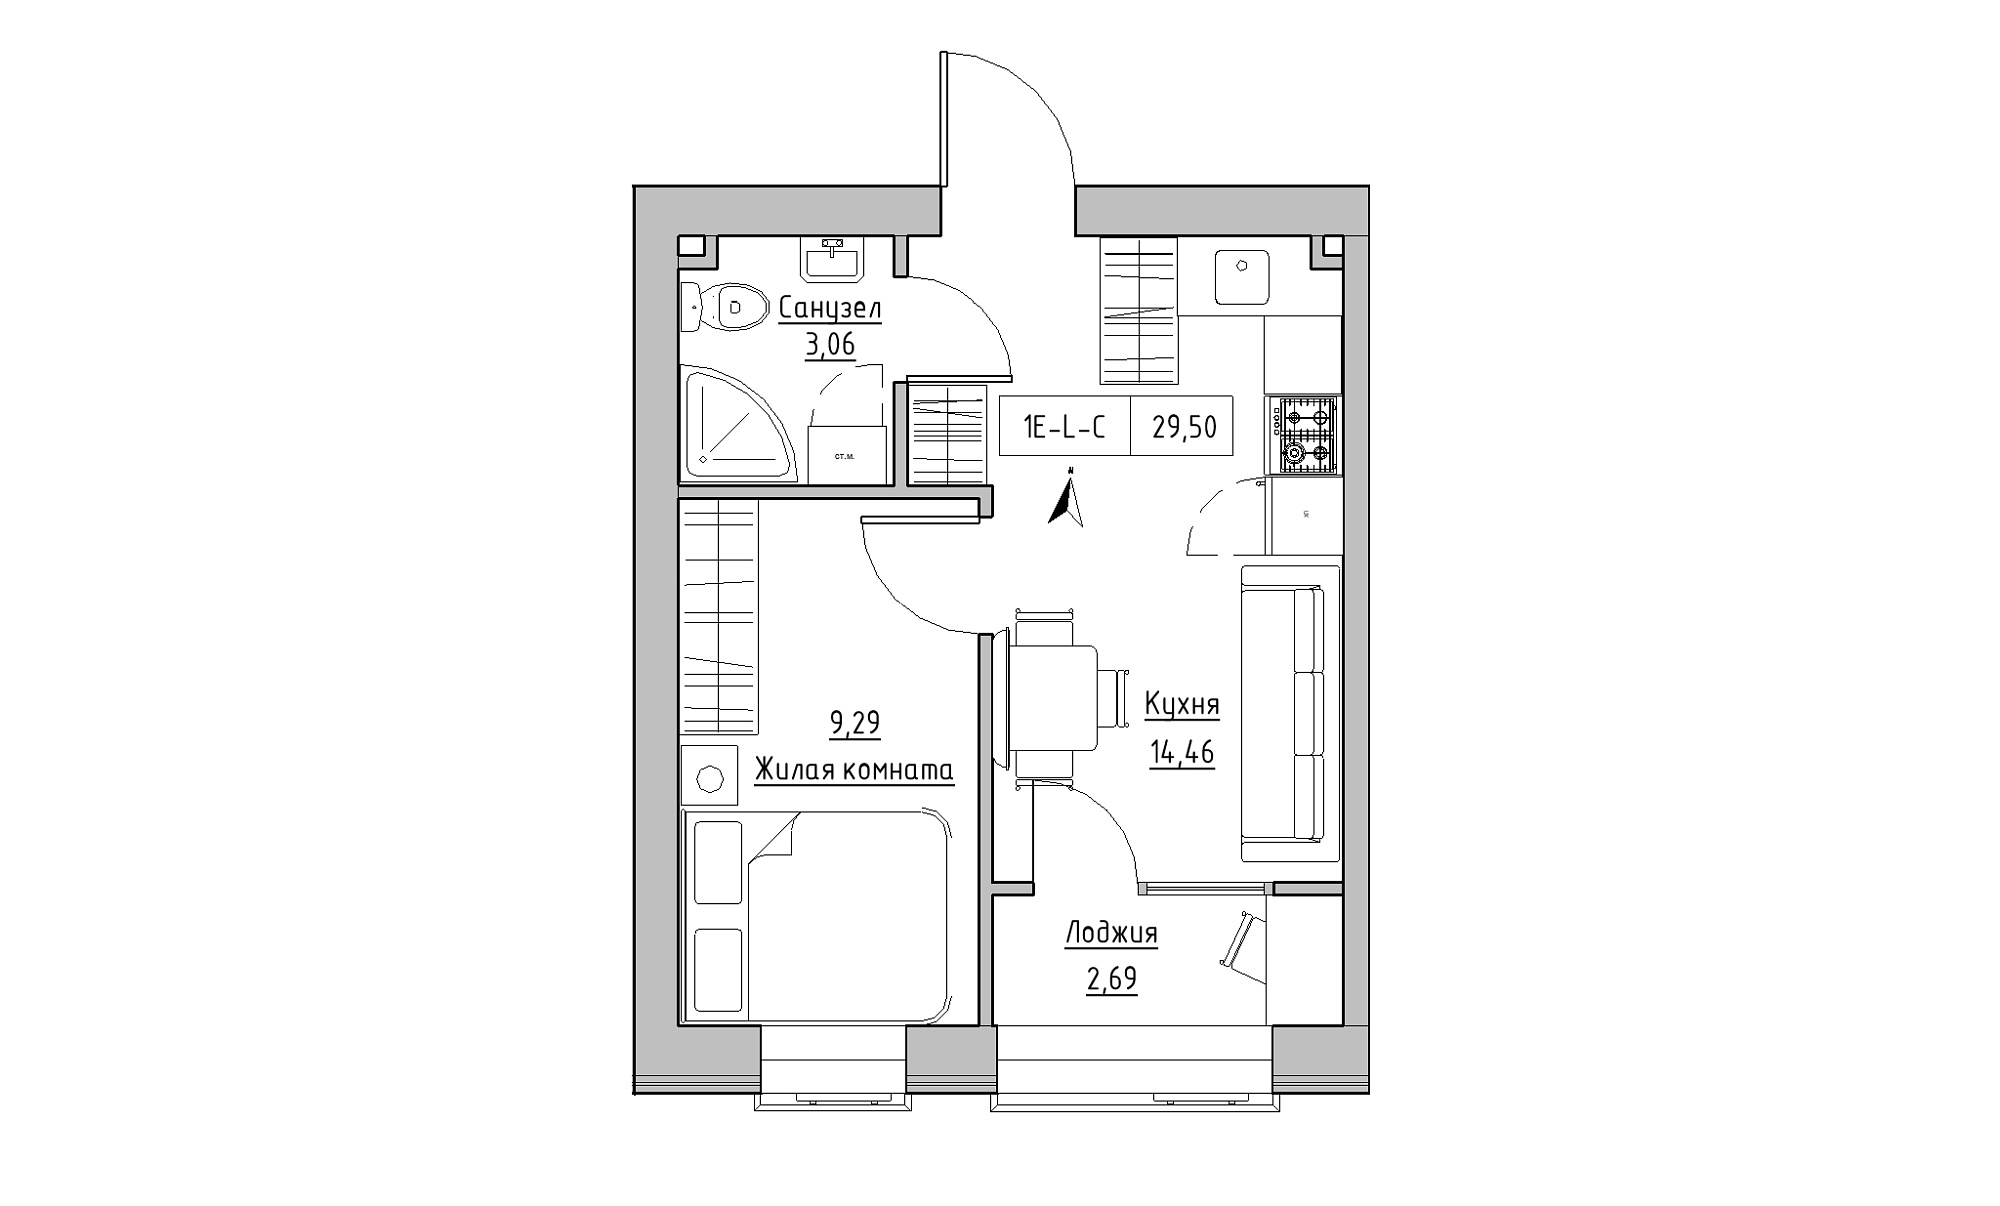 Planning 1-rm flats area 29.5m2, KS-023-03/0011.